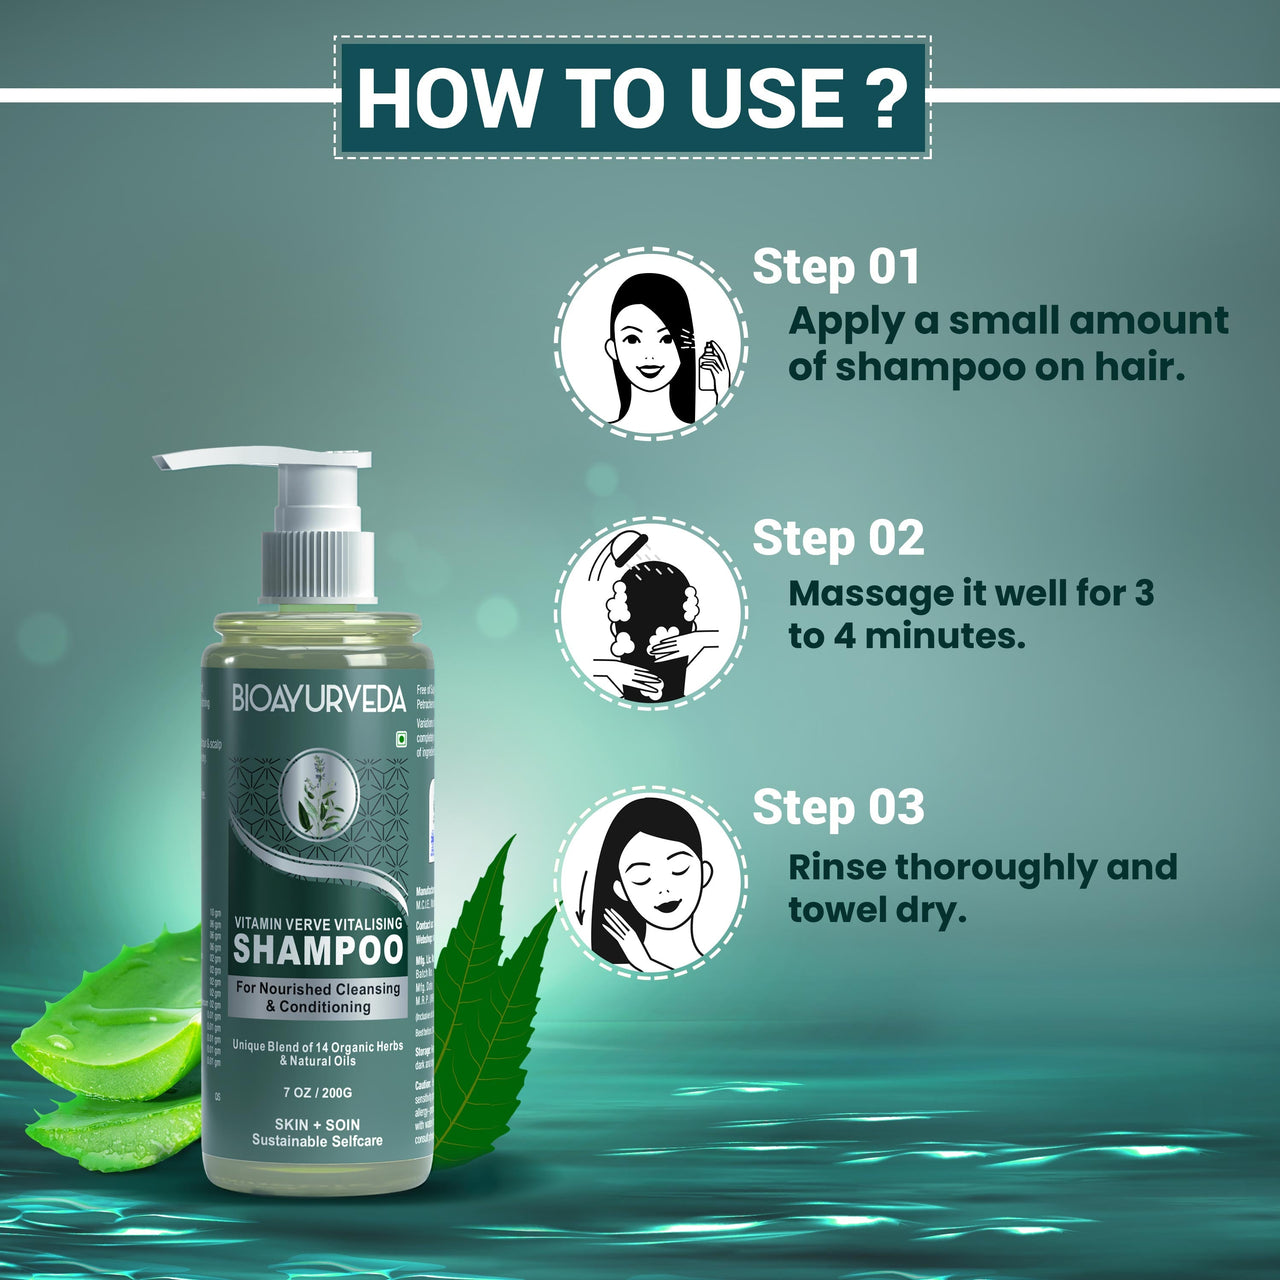 How To Use Vitamin Verve Vitalising Shampoo